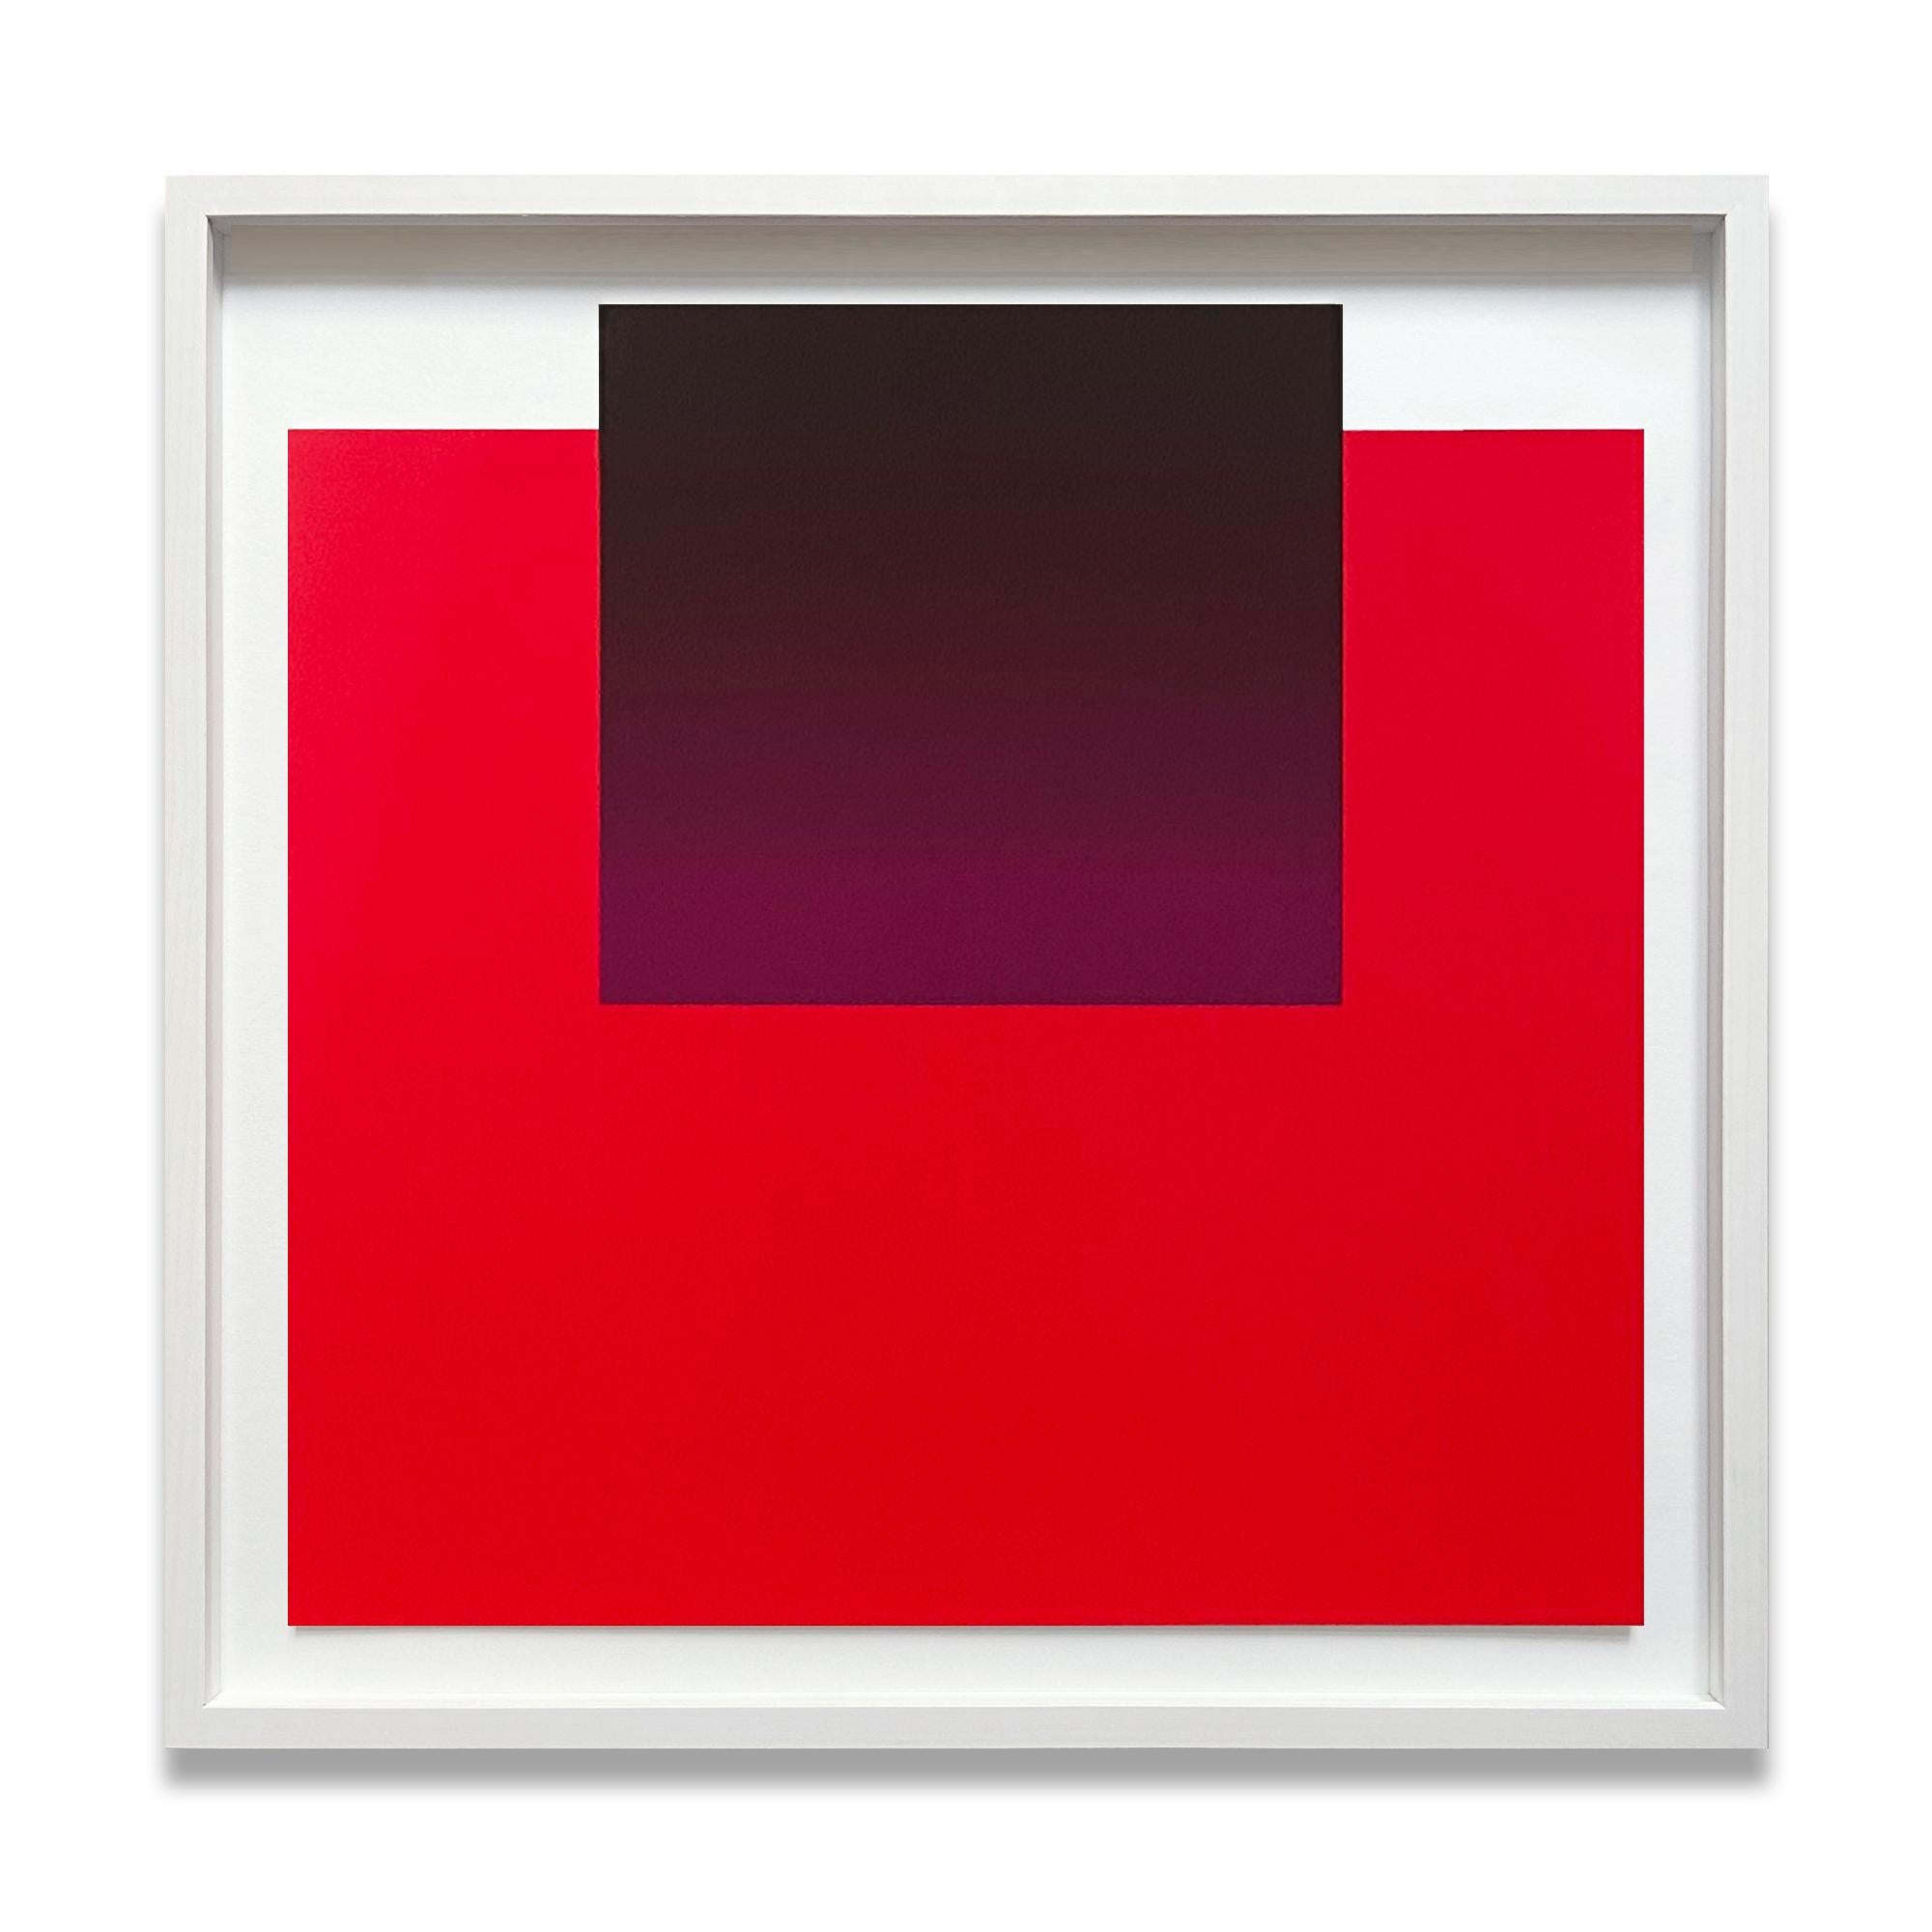 Rupprecht Geiger Abstract Print - Violet on Red, Abstract Art, Minimalism, Modern Art, 20th Century